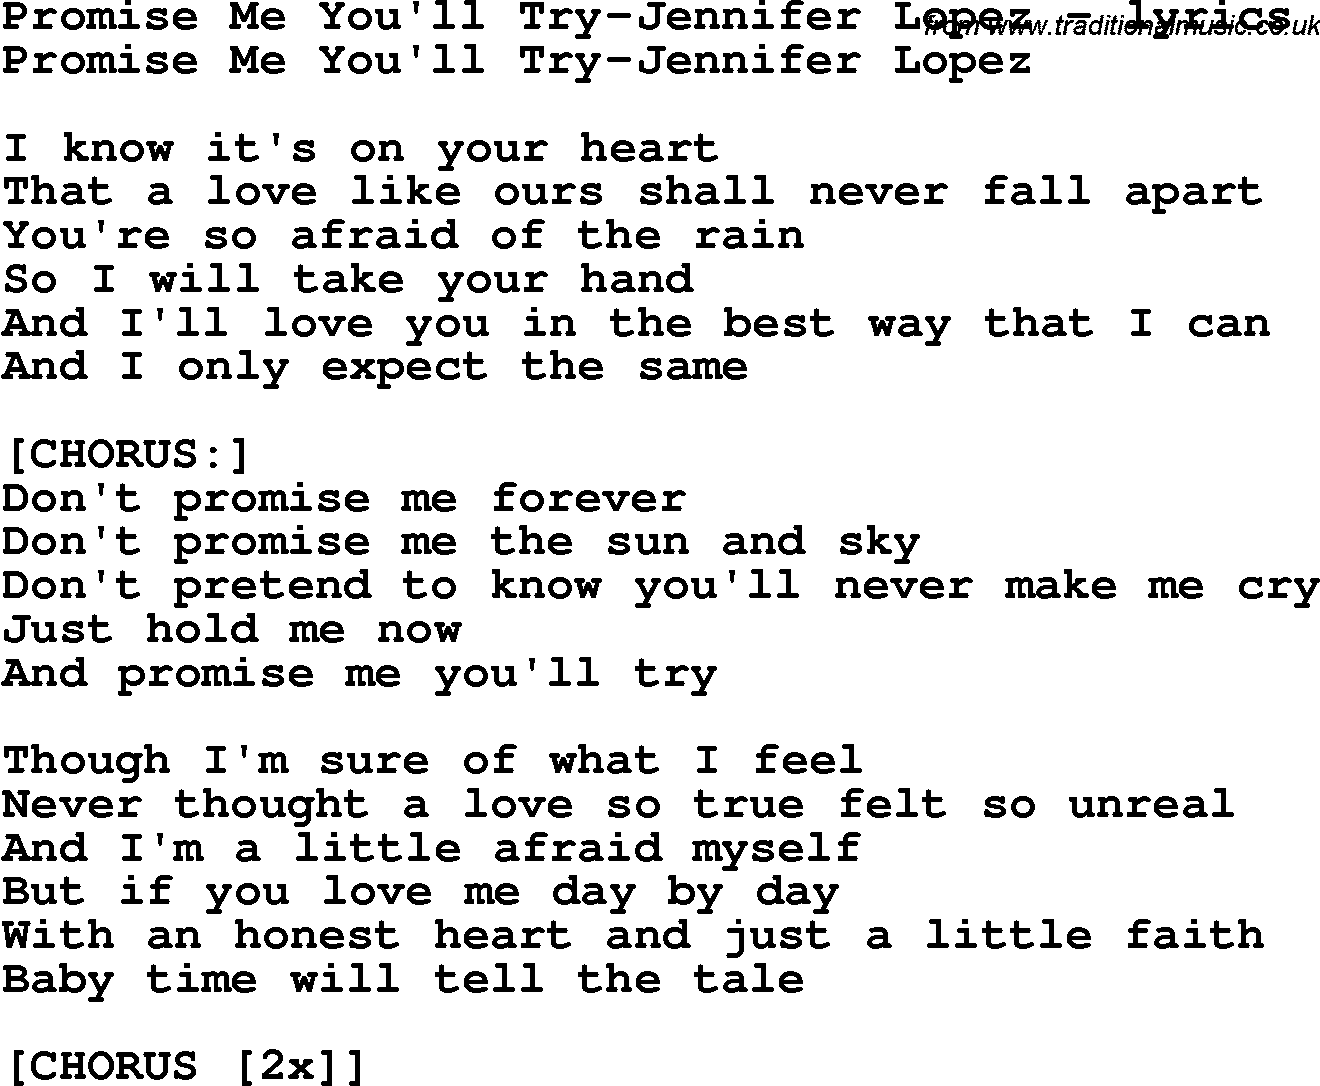 Love Song Lyrics for: Promise Me You'll Try-Jennifer Lopez